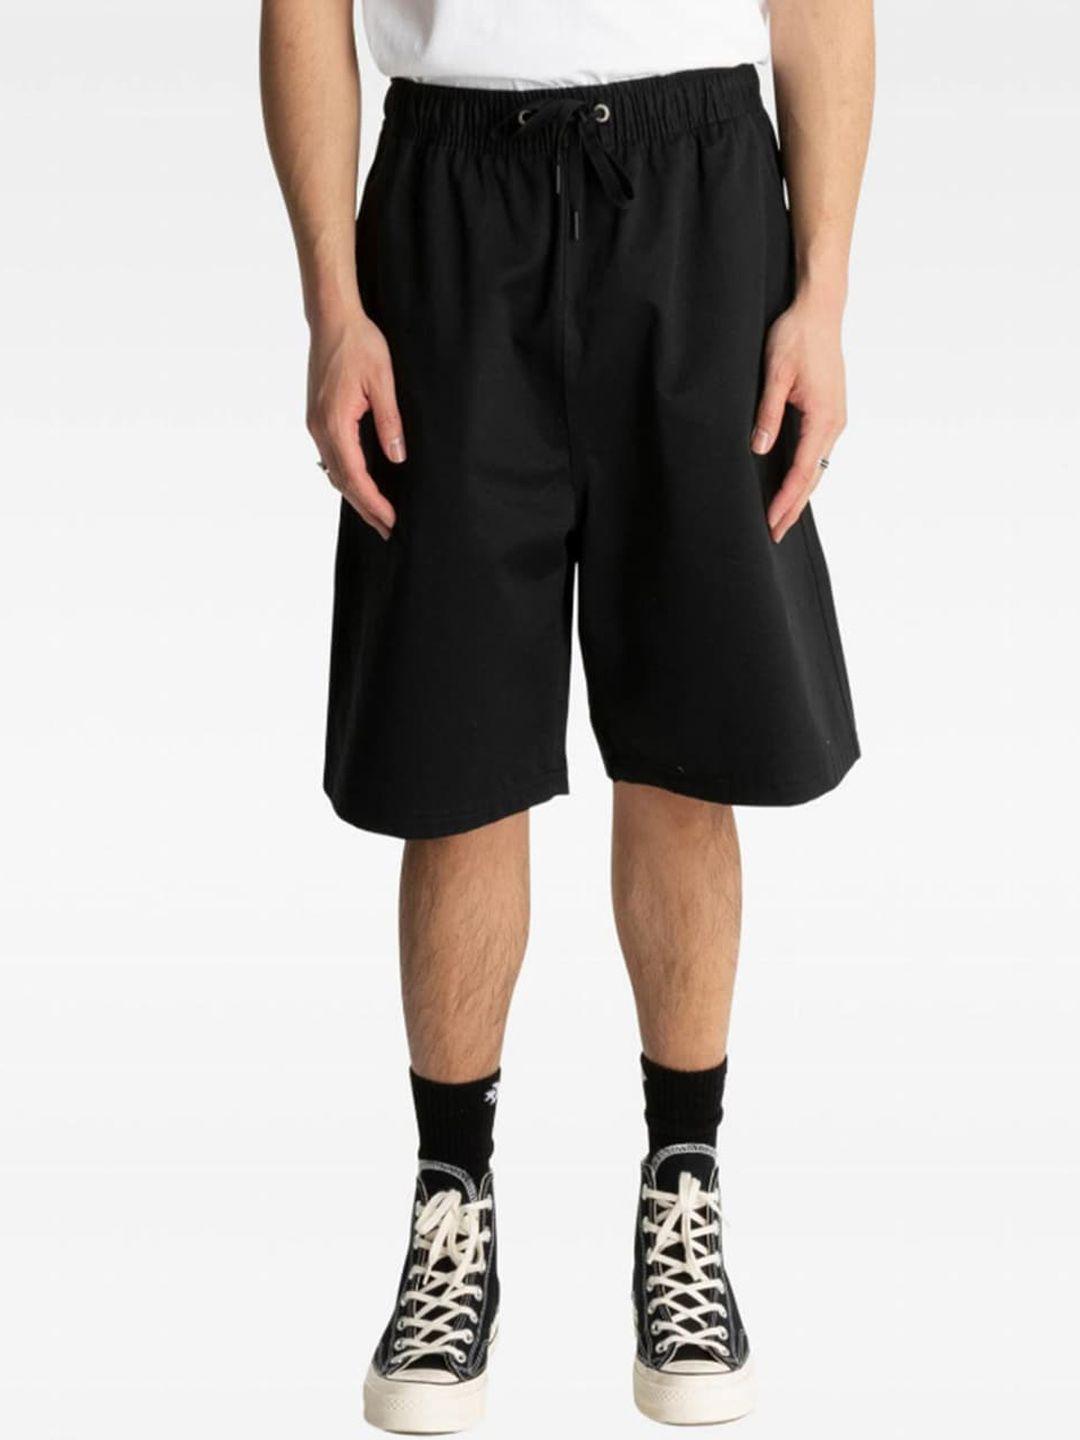 converse-men-loose-fit-shorts